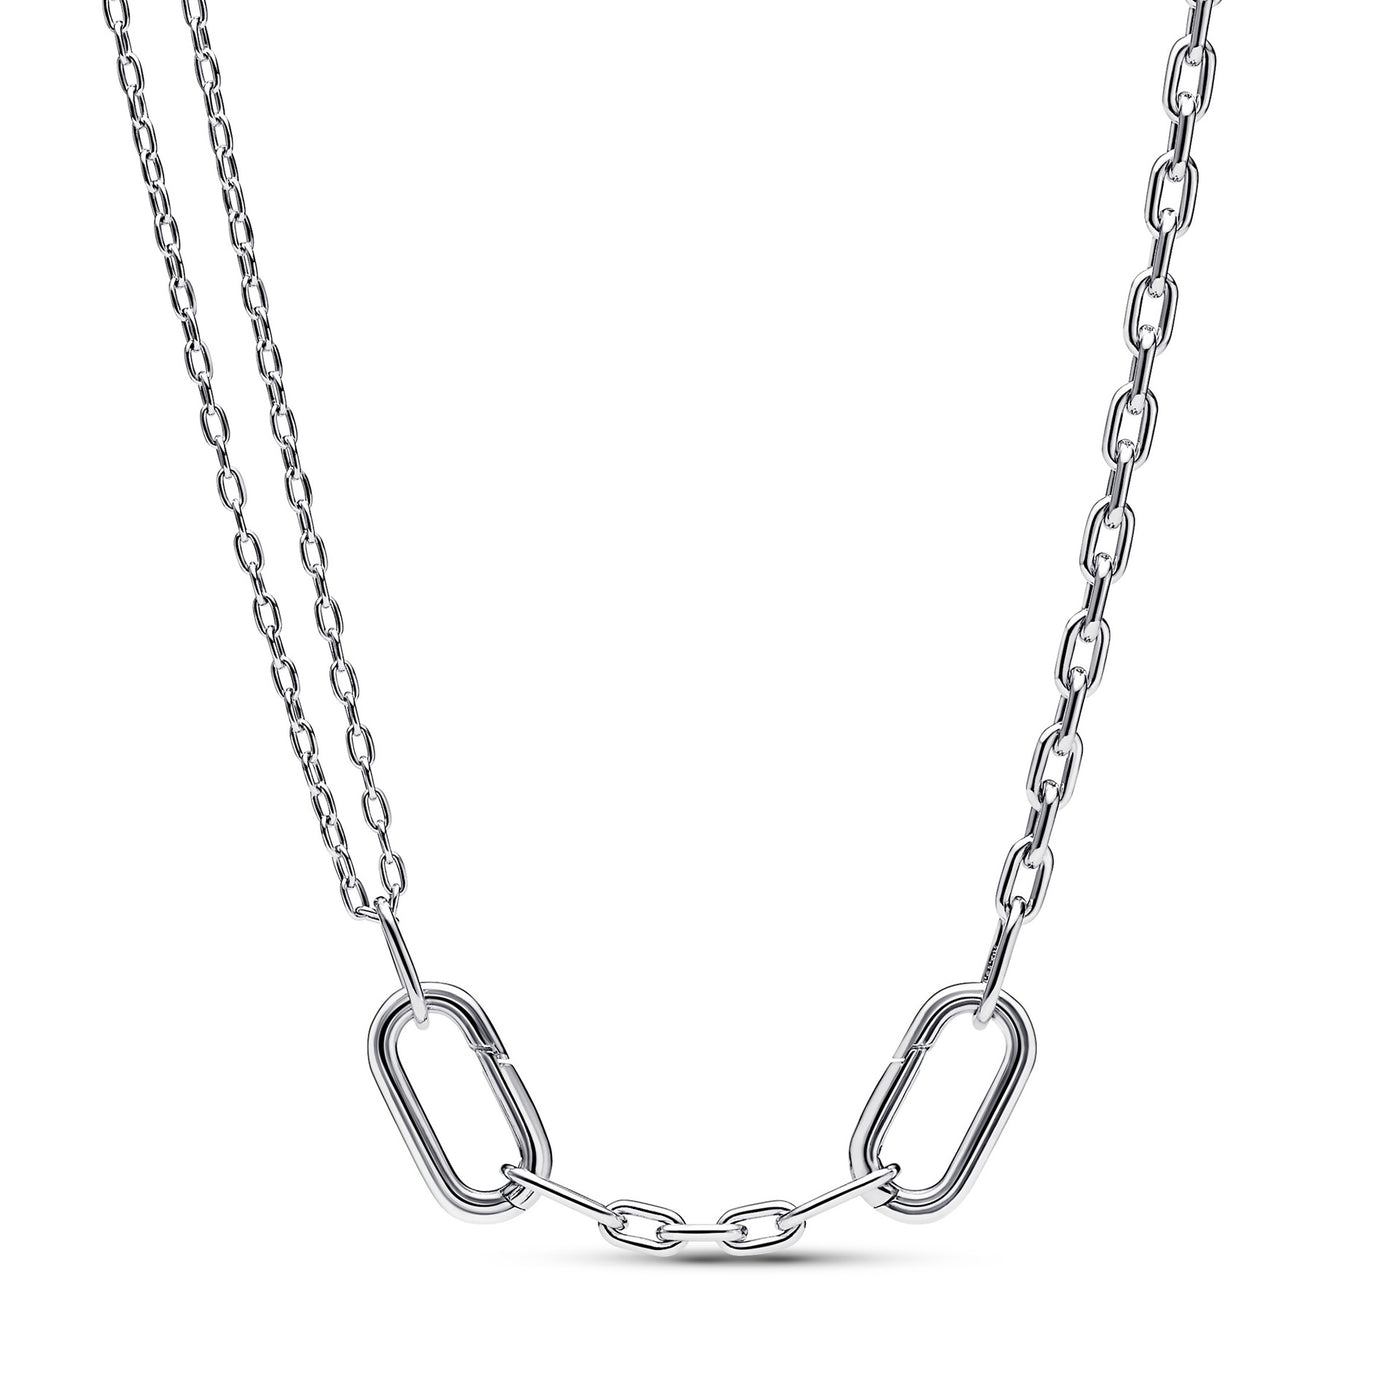 Pandora ME Silver Double Link Chain Necklace